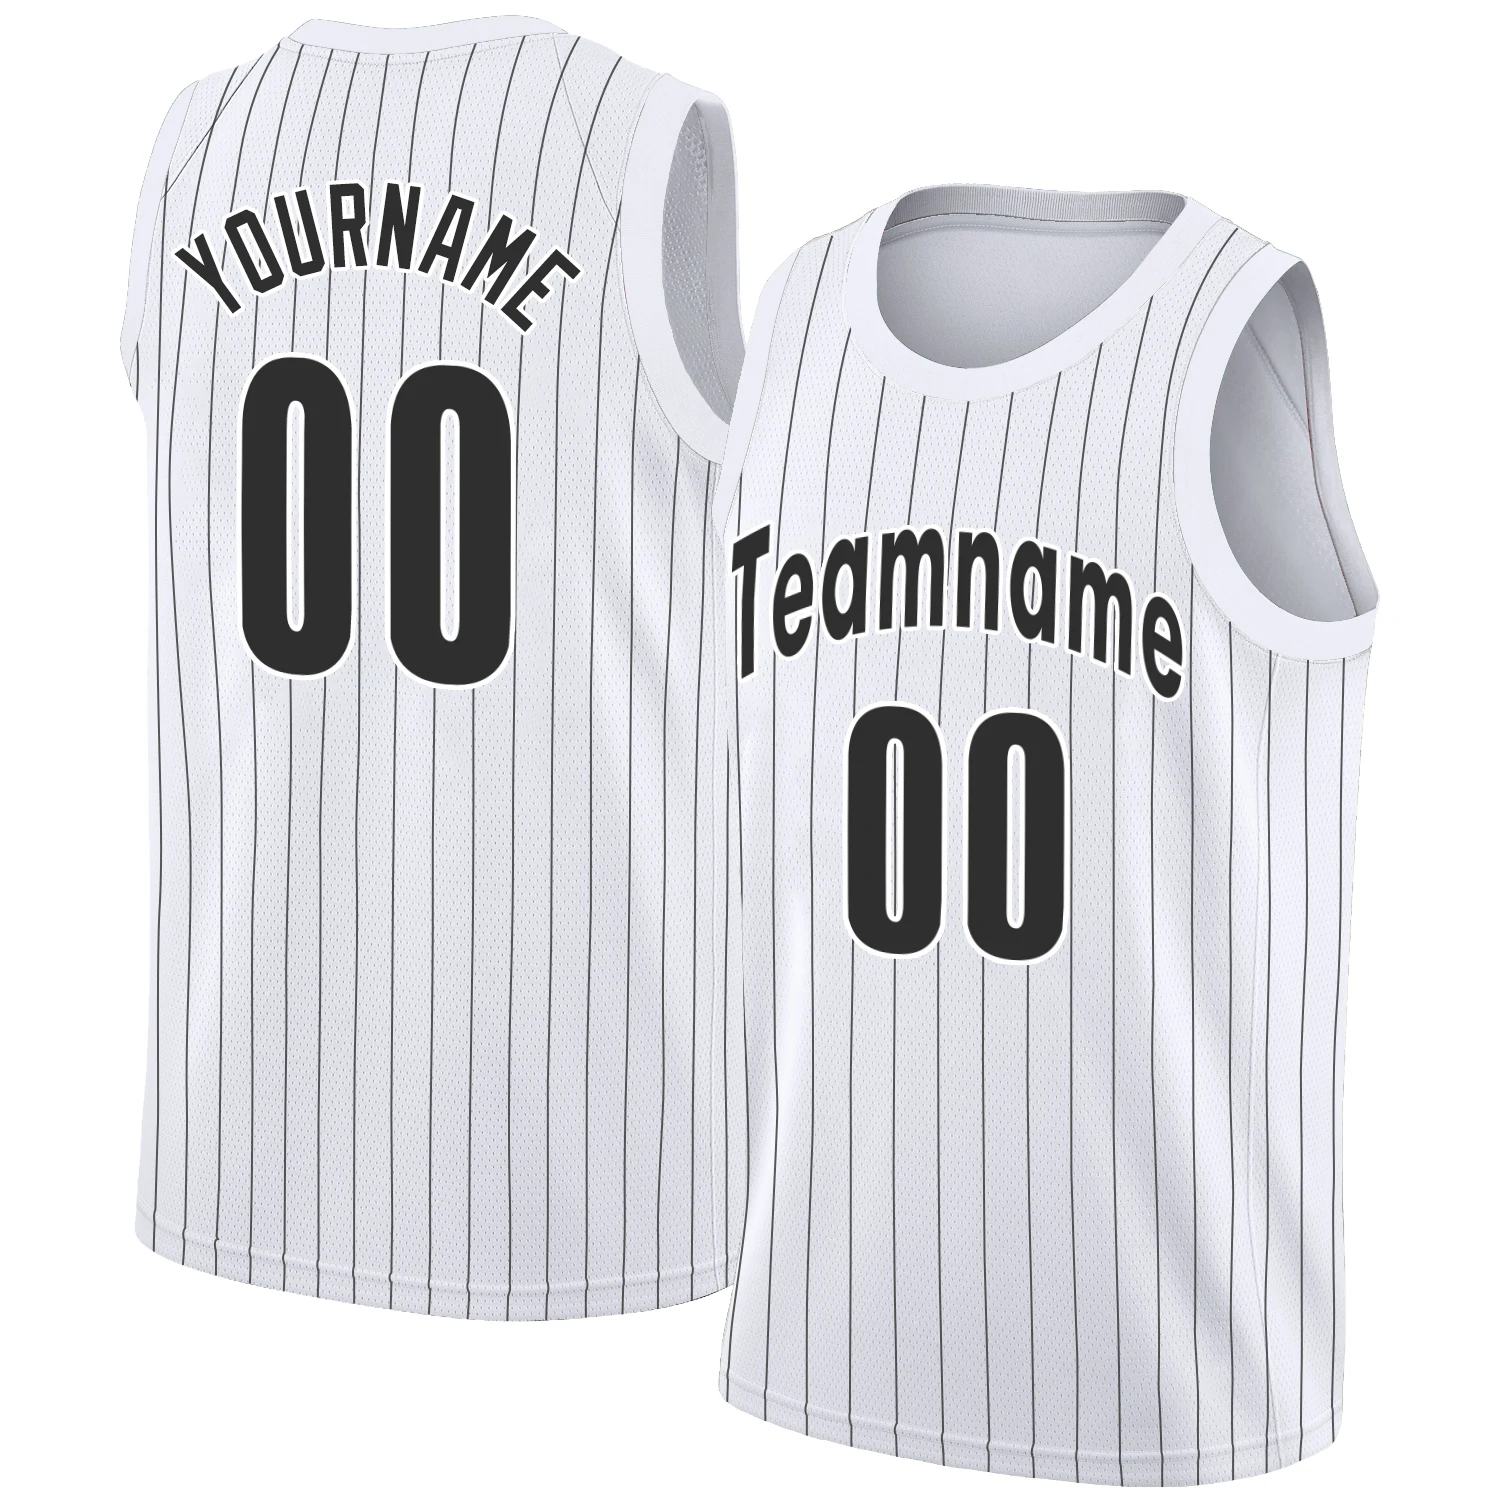 Custom Long-sleeve Basketball Shirt With Name & Number Long 